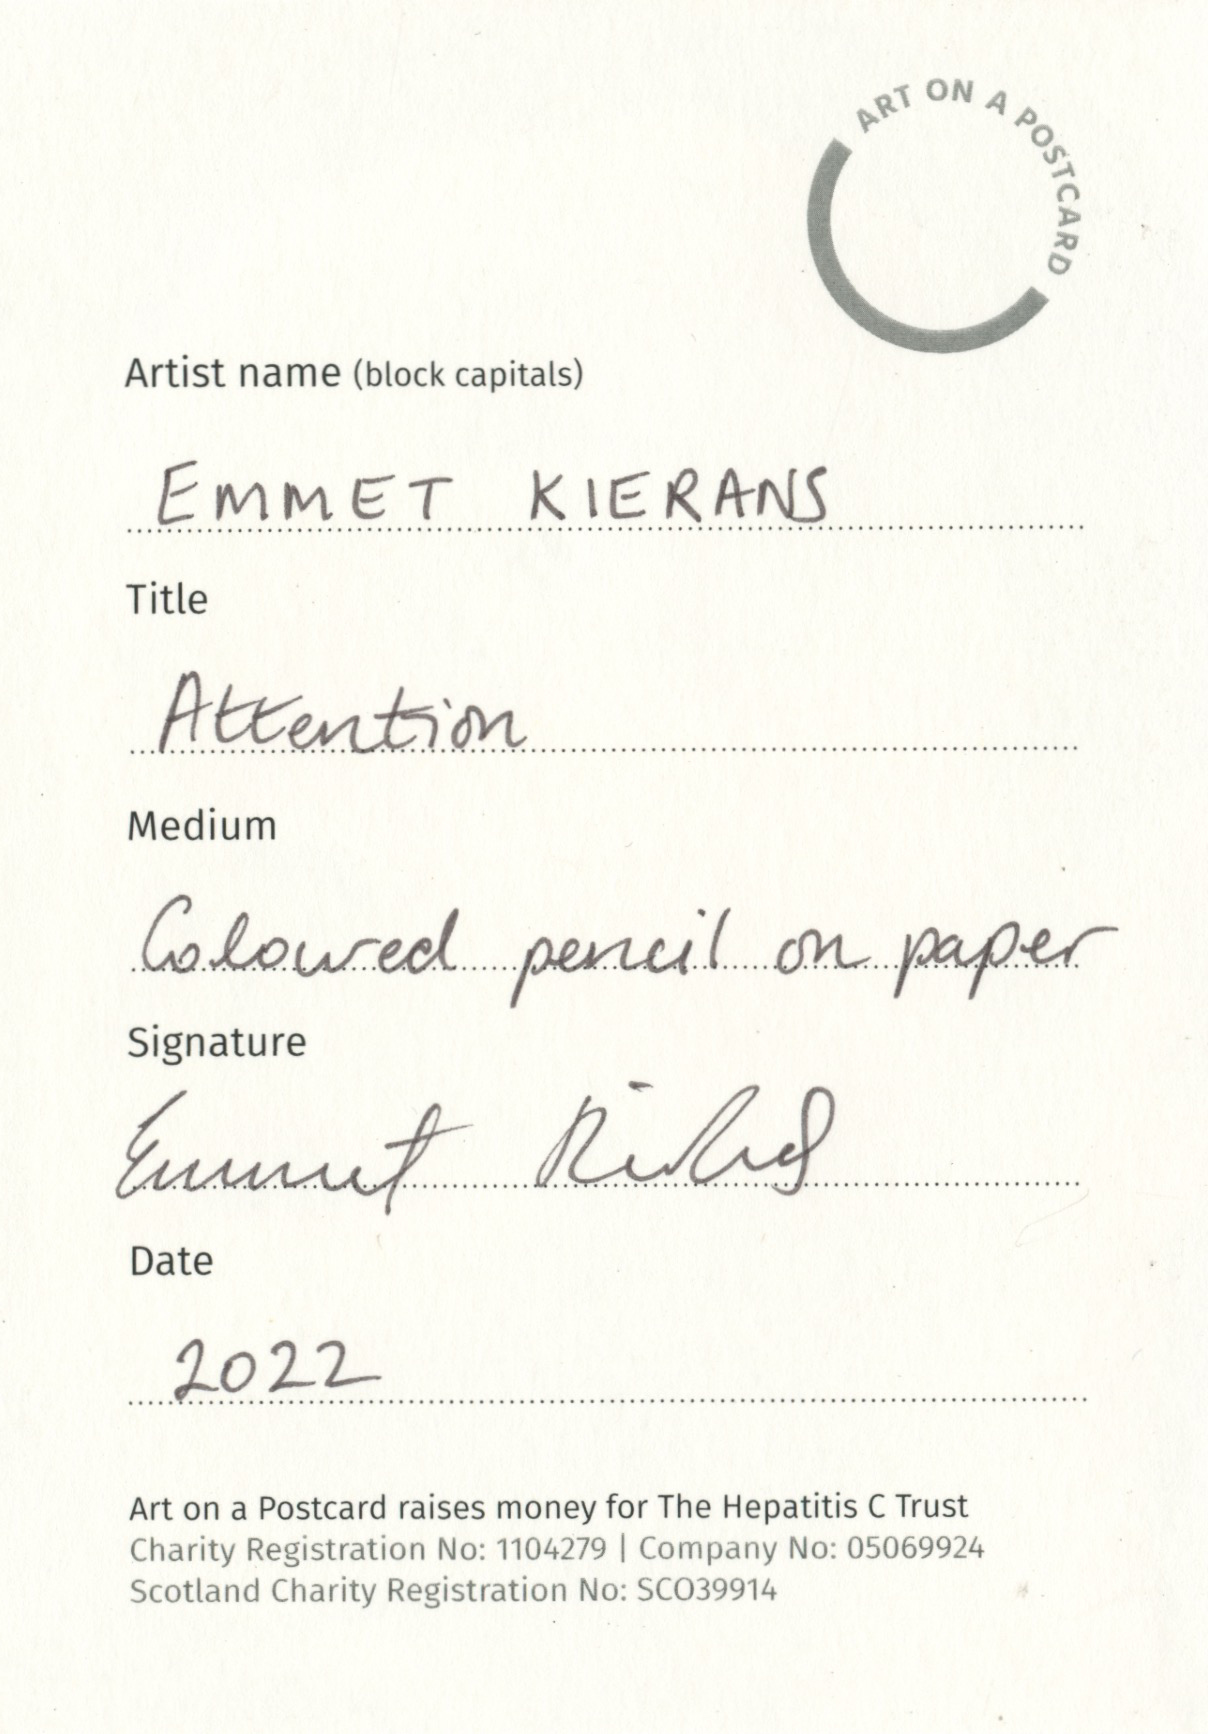 93. Emmet Kierans - Attention - BACK